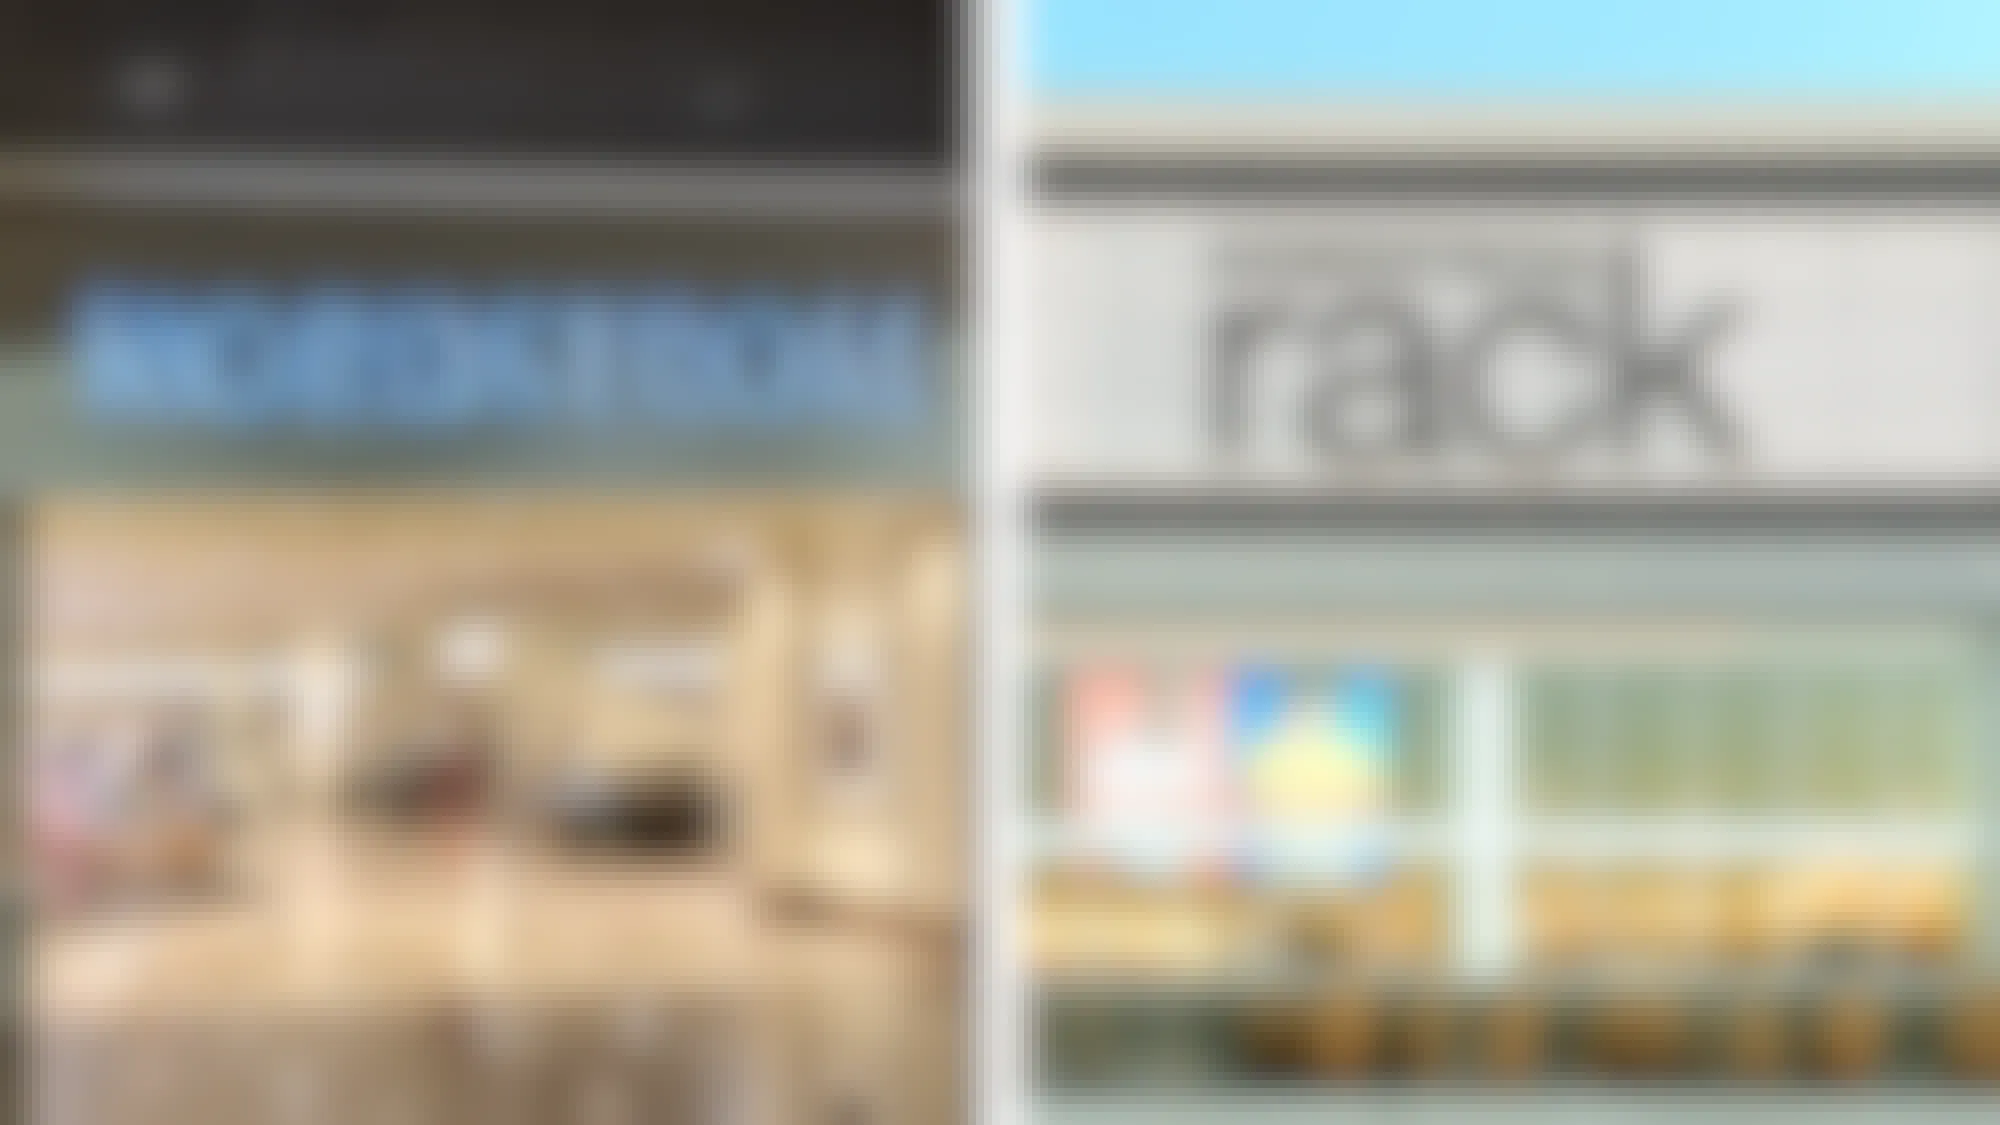 nordstrom versus nordstrom rack storefronts